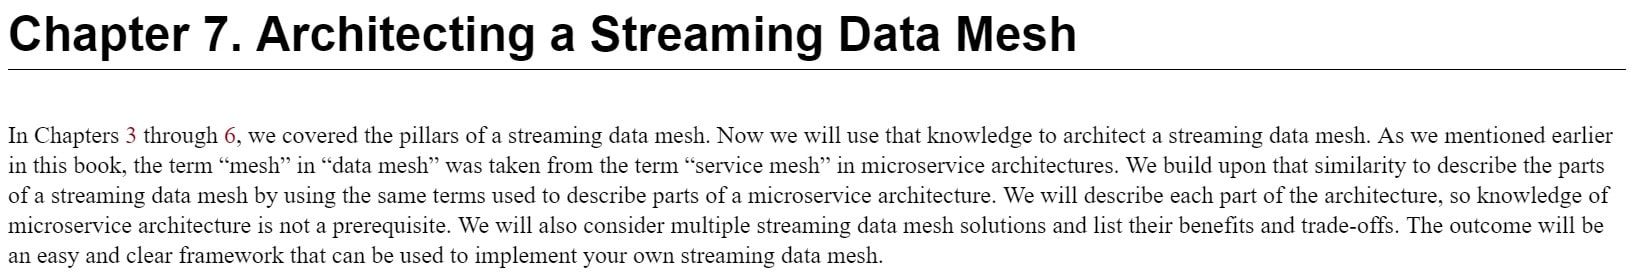 فصل 7 کتاب Streaming Data Mesh